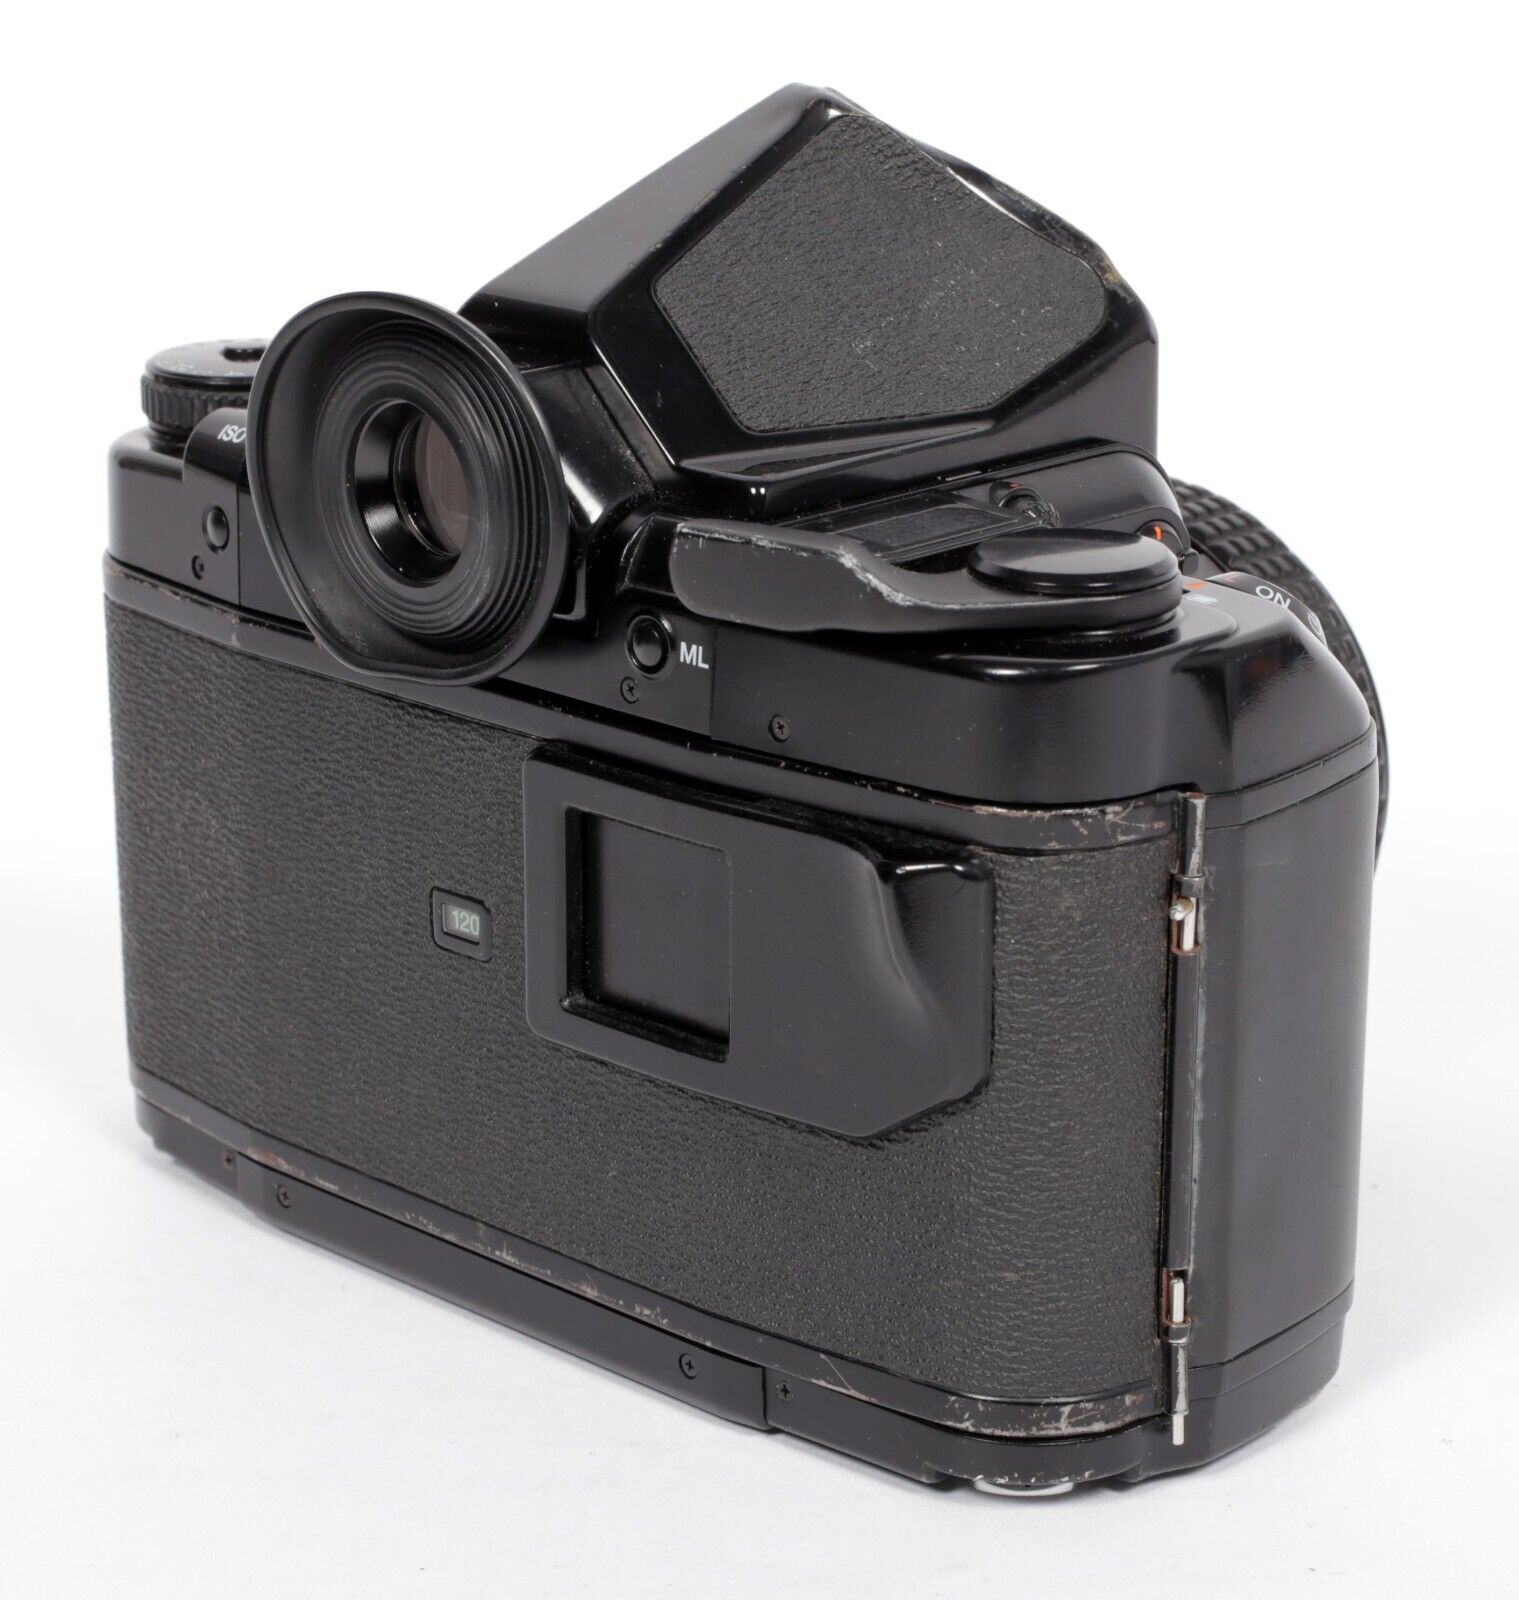 Pentax 67 II 6X7 camera with SMC 90mm F2.8 lens